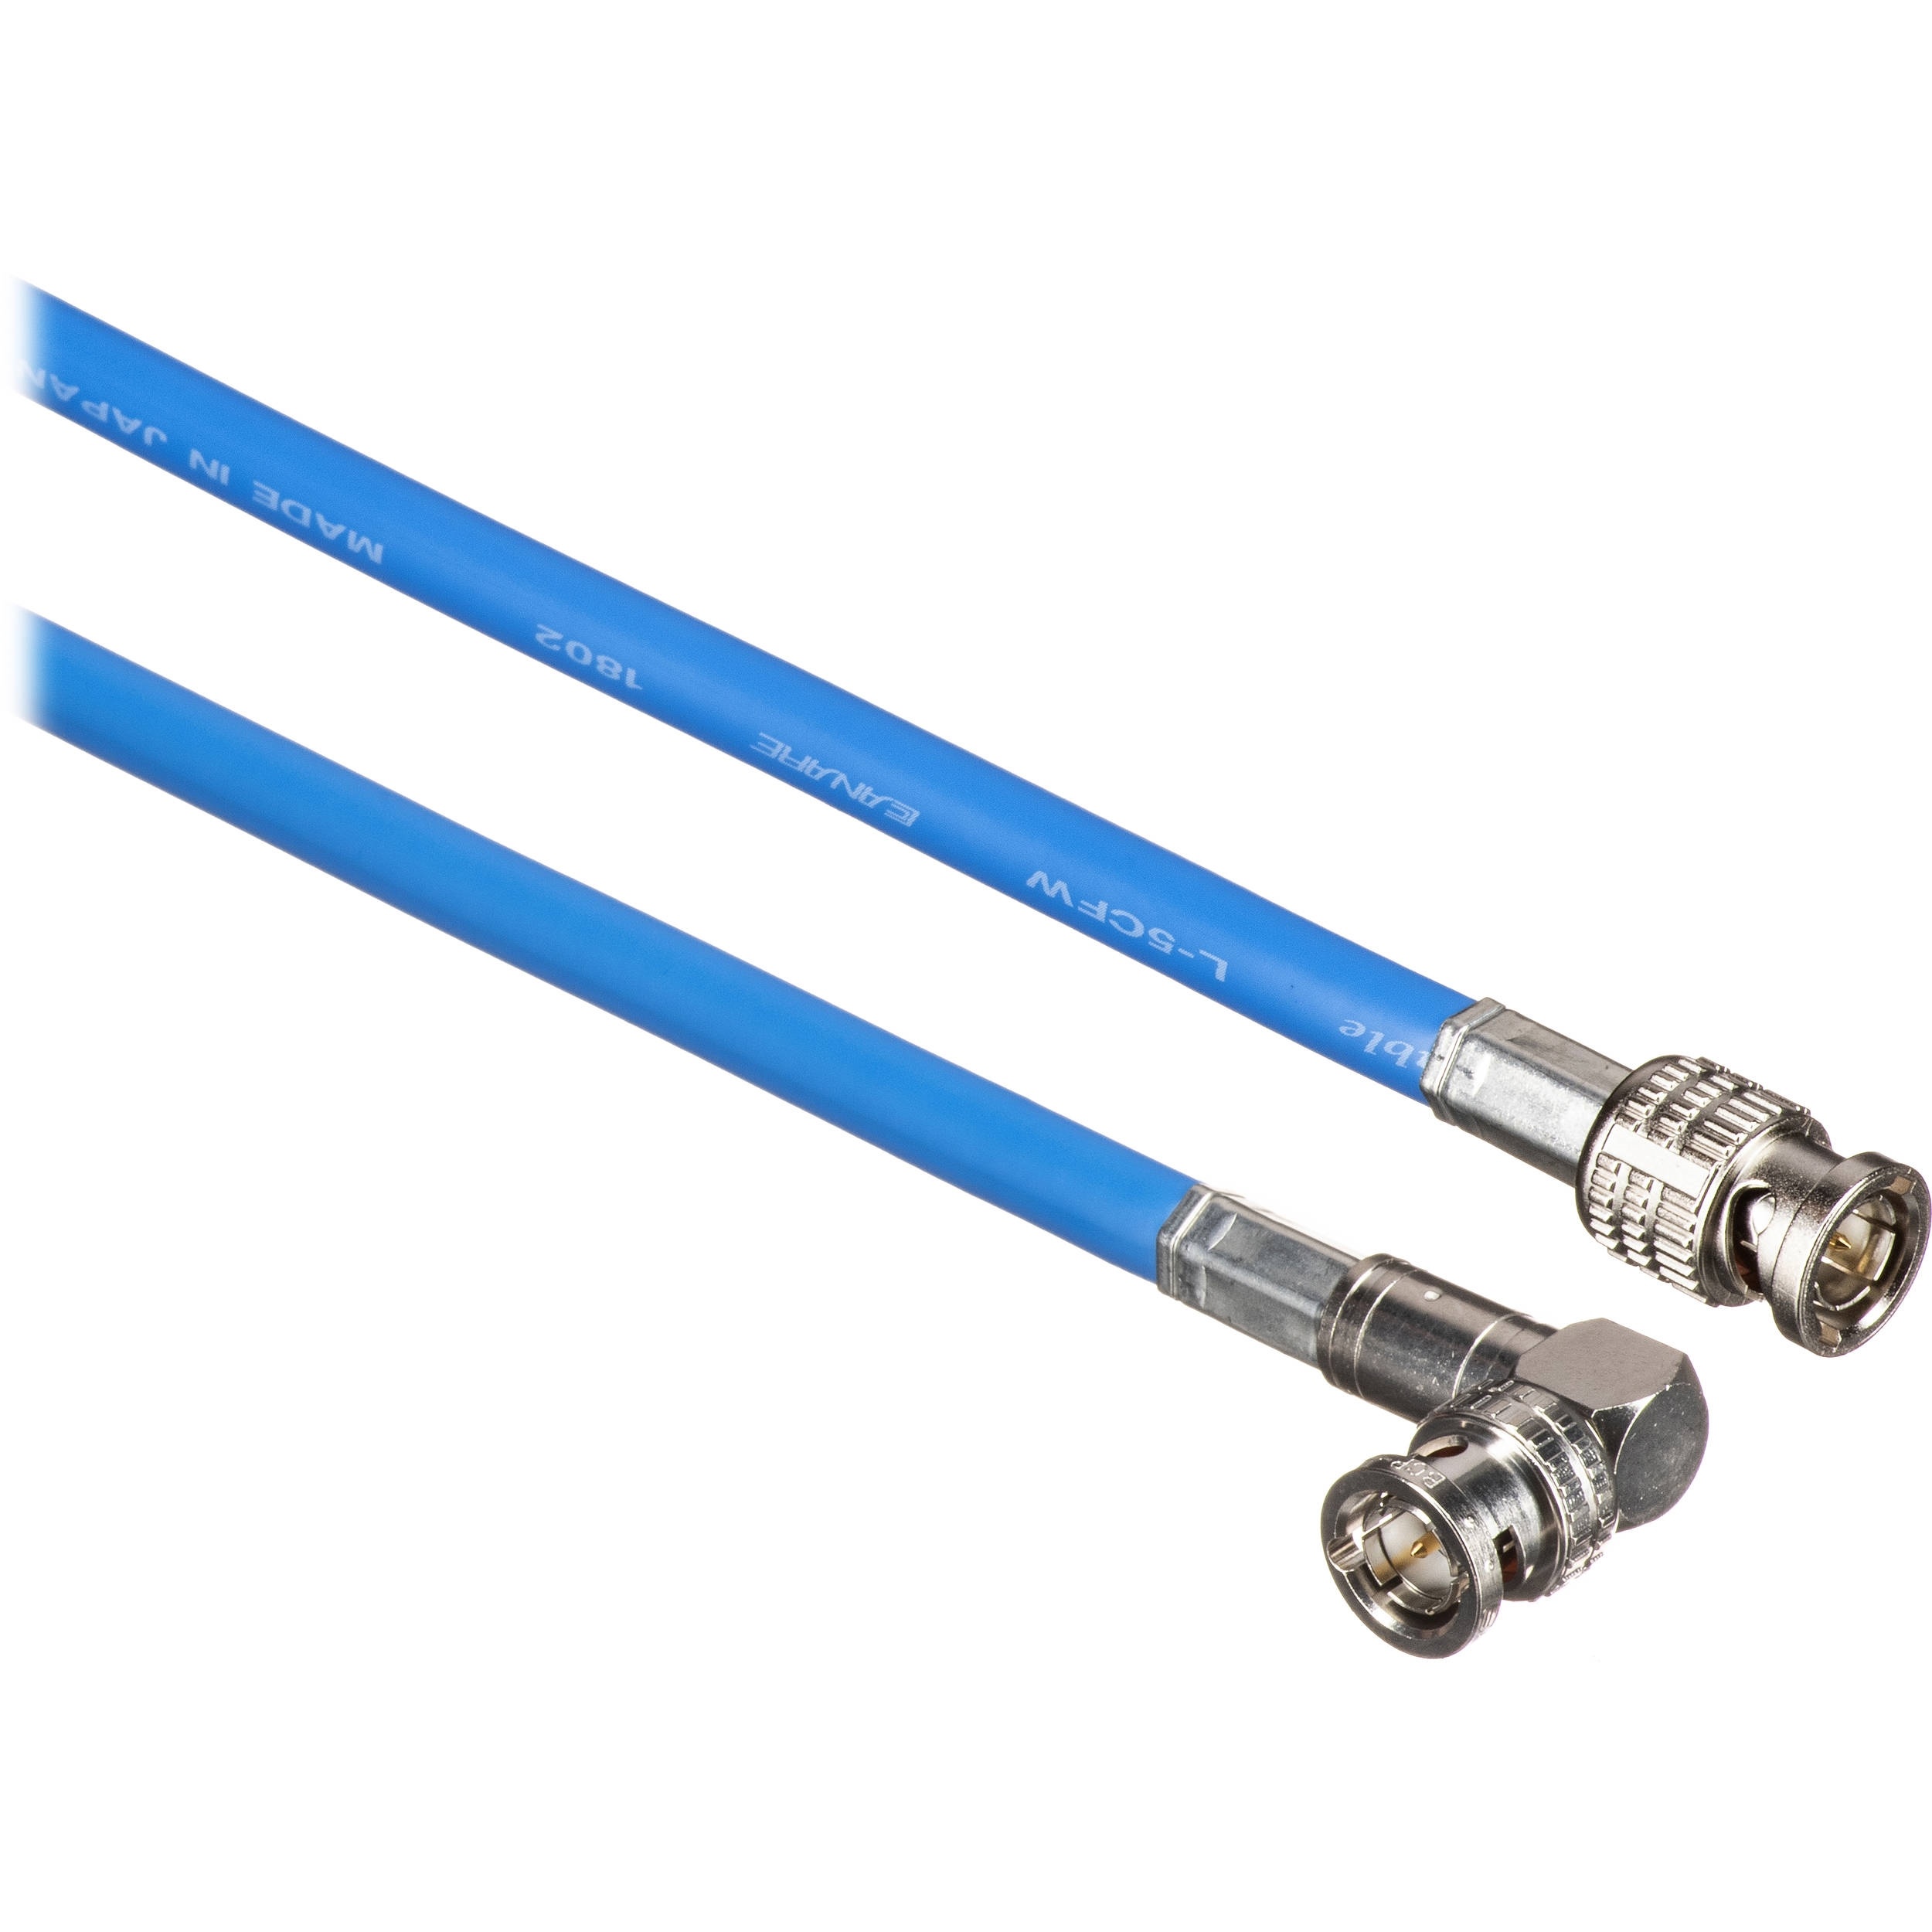 Canare Male to Right Angle Male HD-SDI Video Cable (Blue, 75')